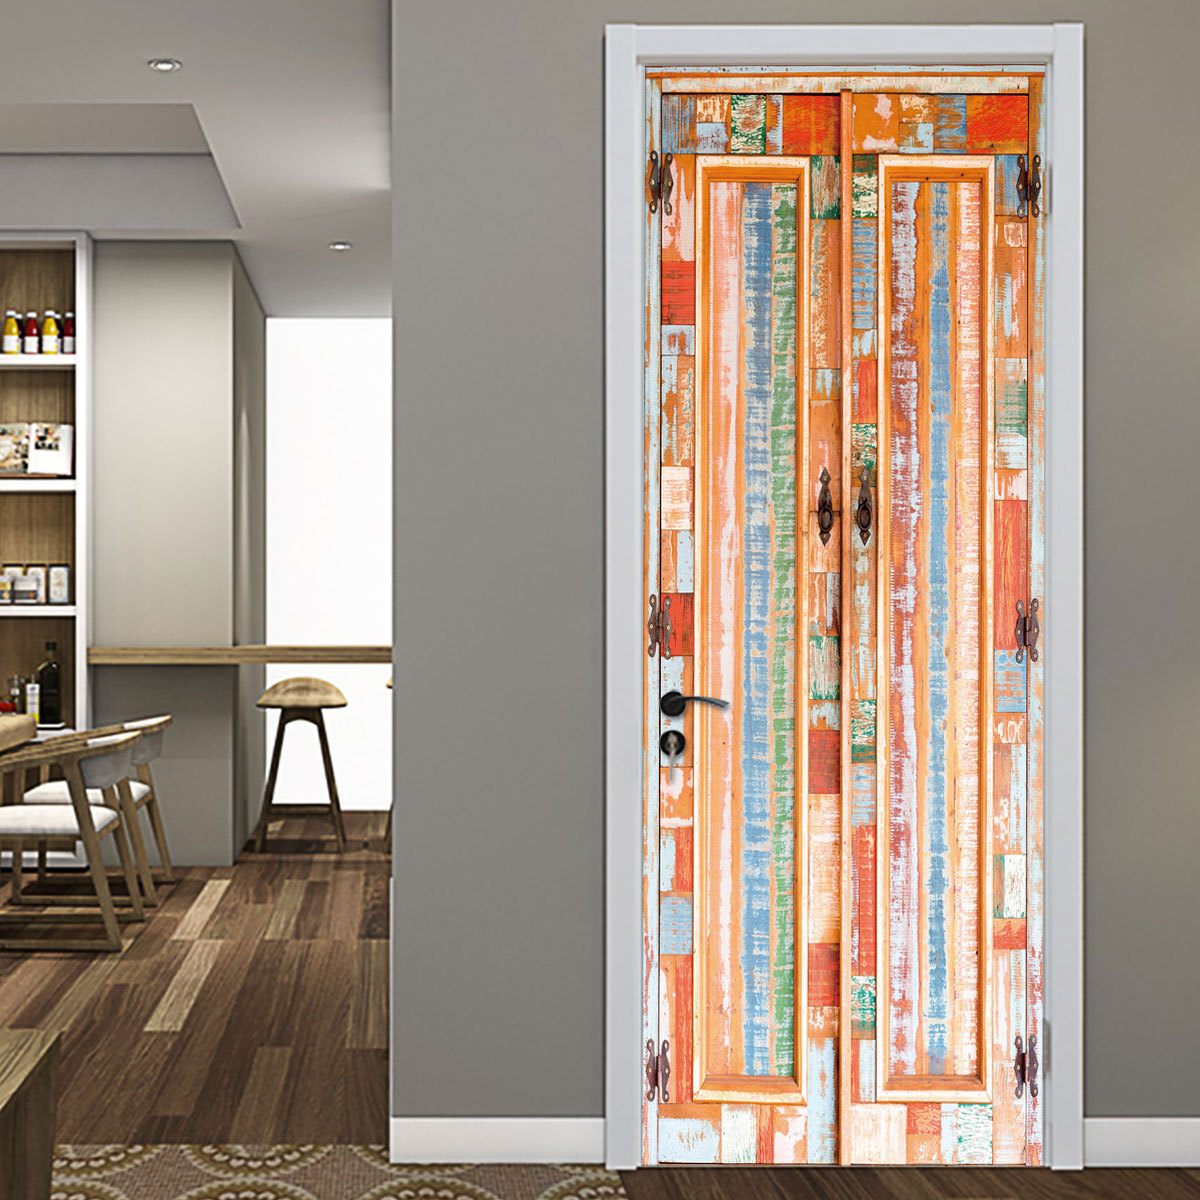 Mt311 village cabinet wooden door 3D solid door sticker home personalized decoration wall sticker self-adhesive